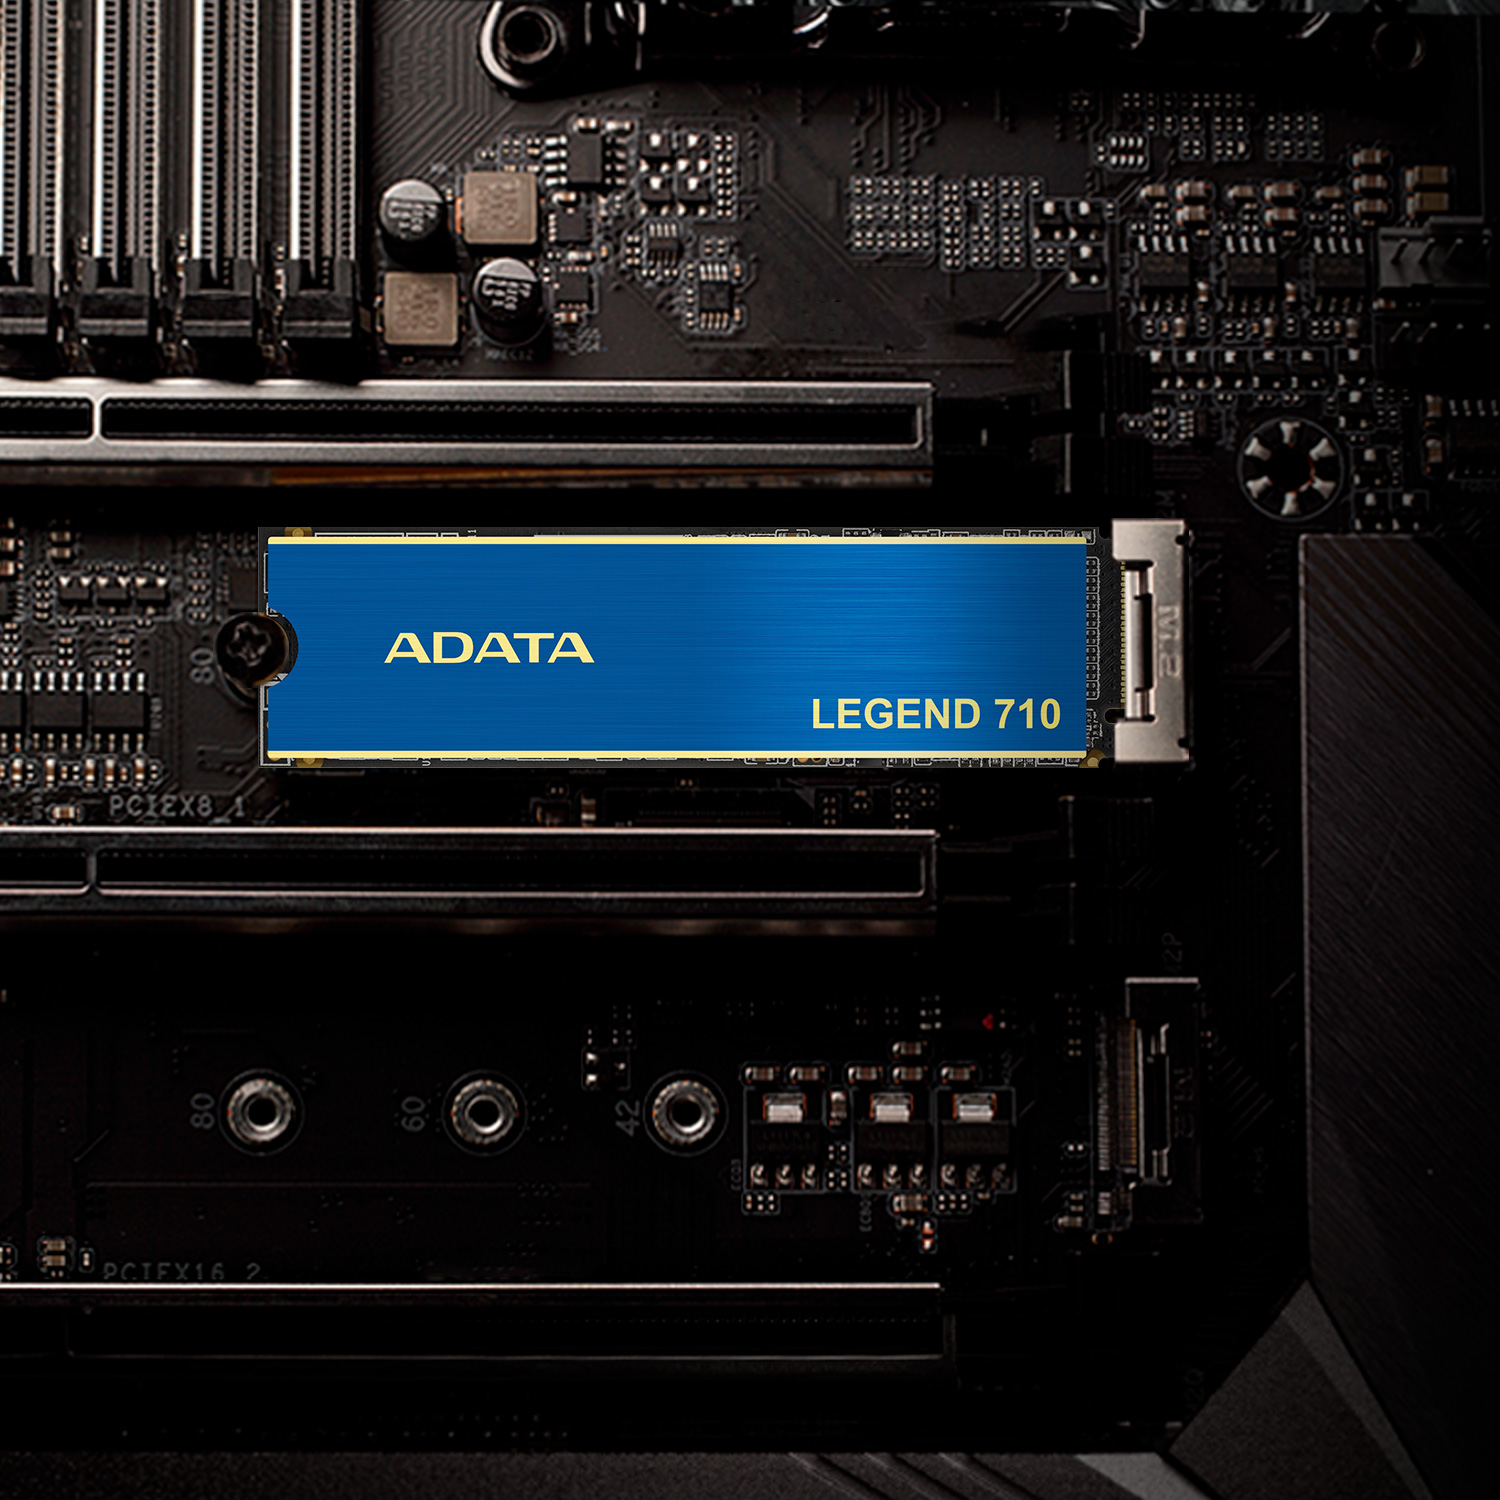 ADATA 512GB Legend 710 M.2 PCIe M.2 2280 SSD